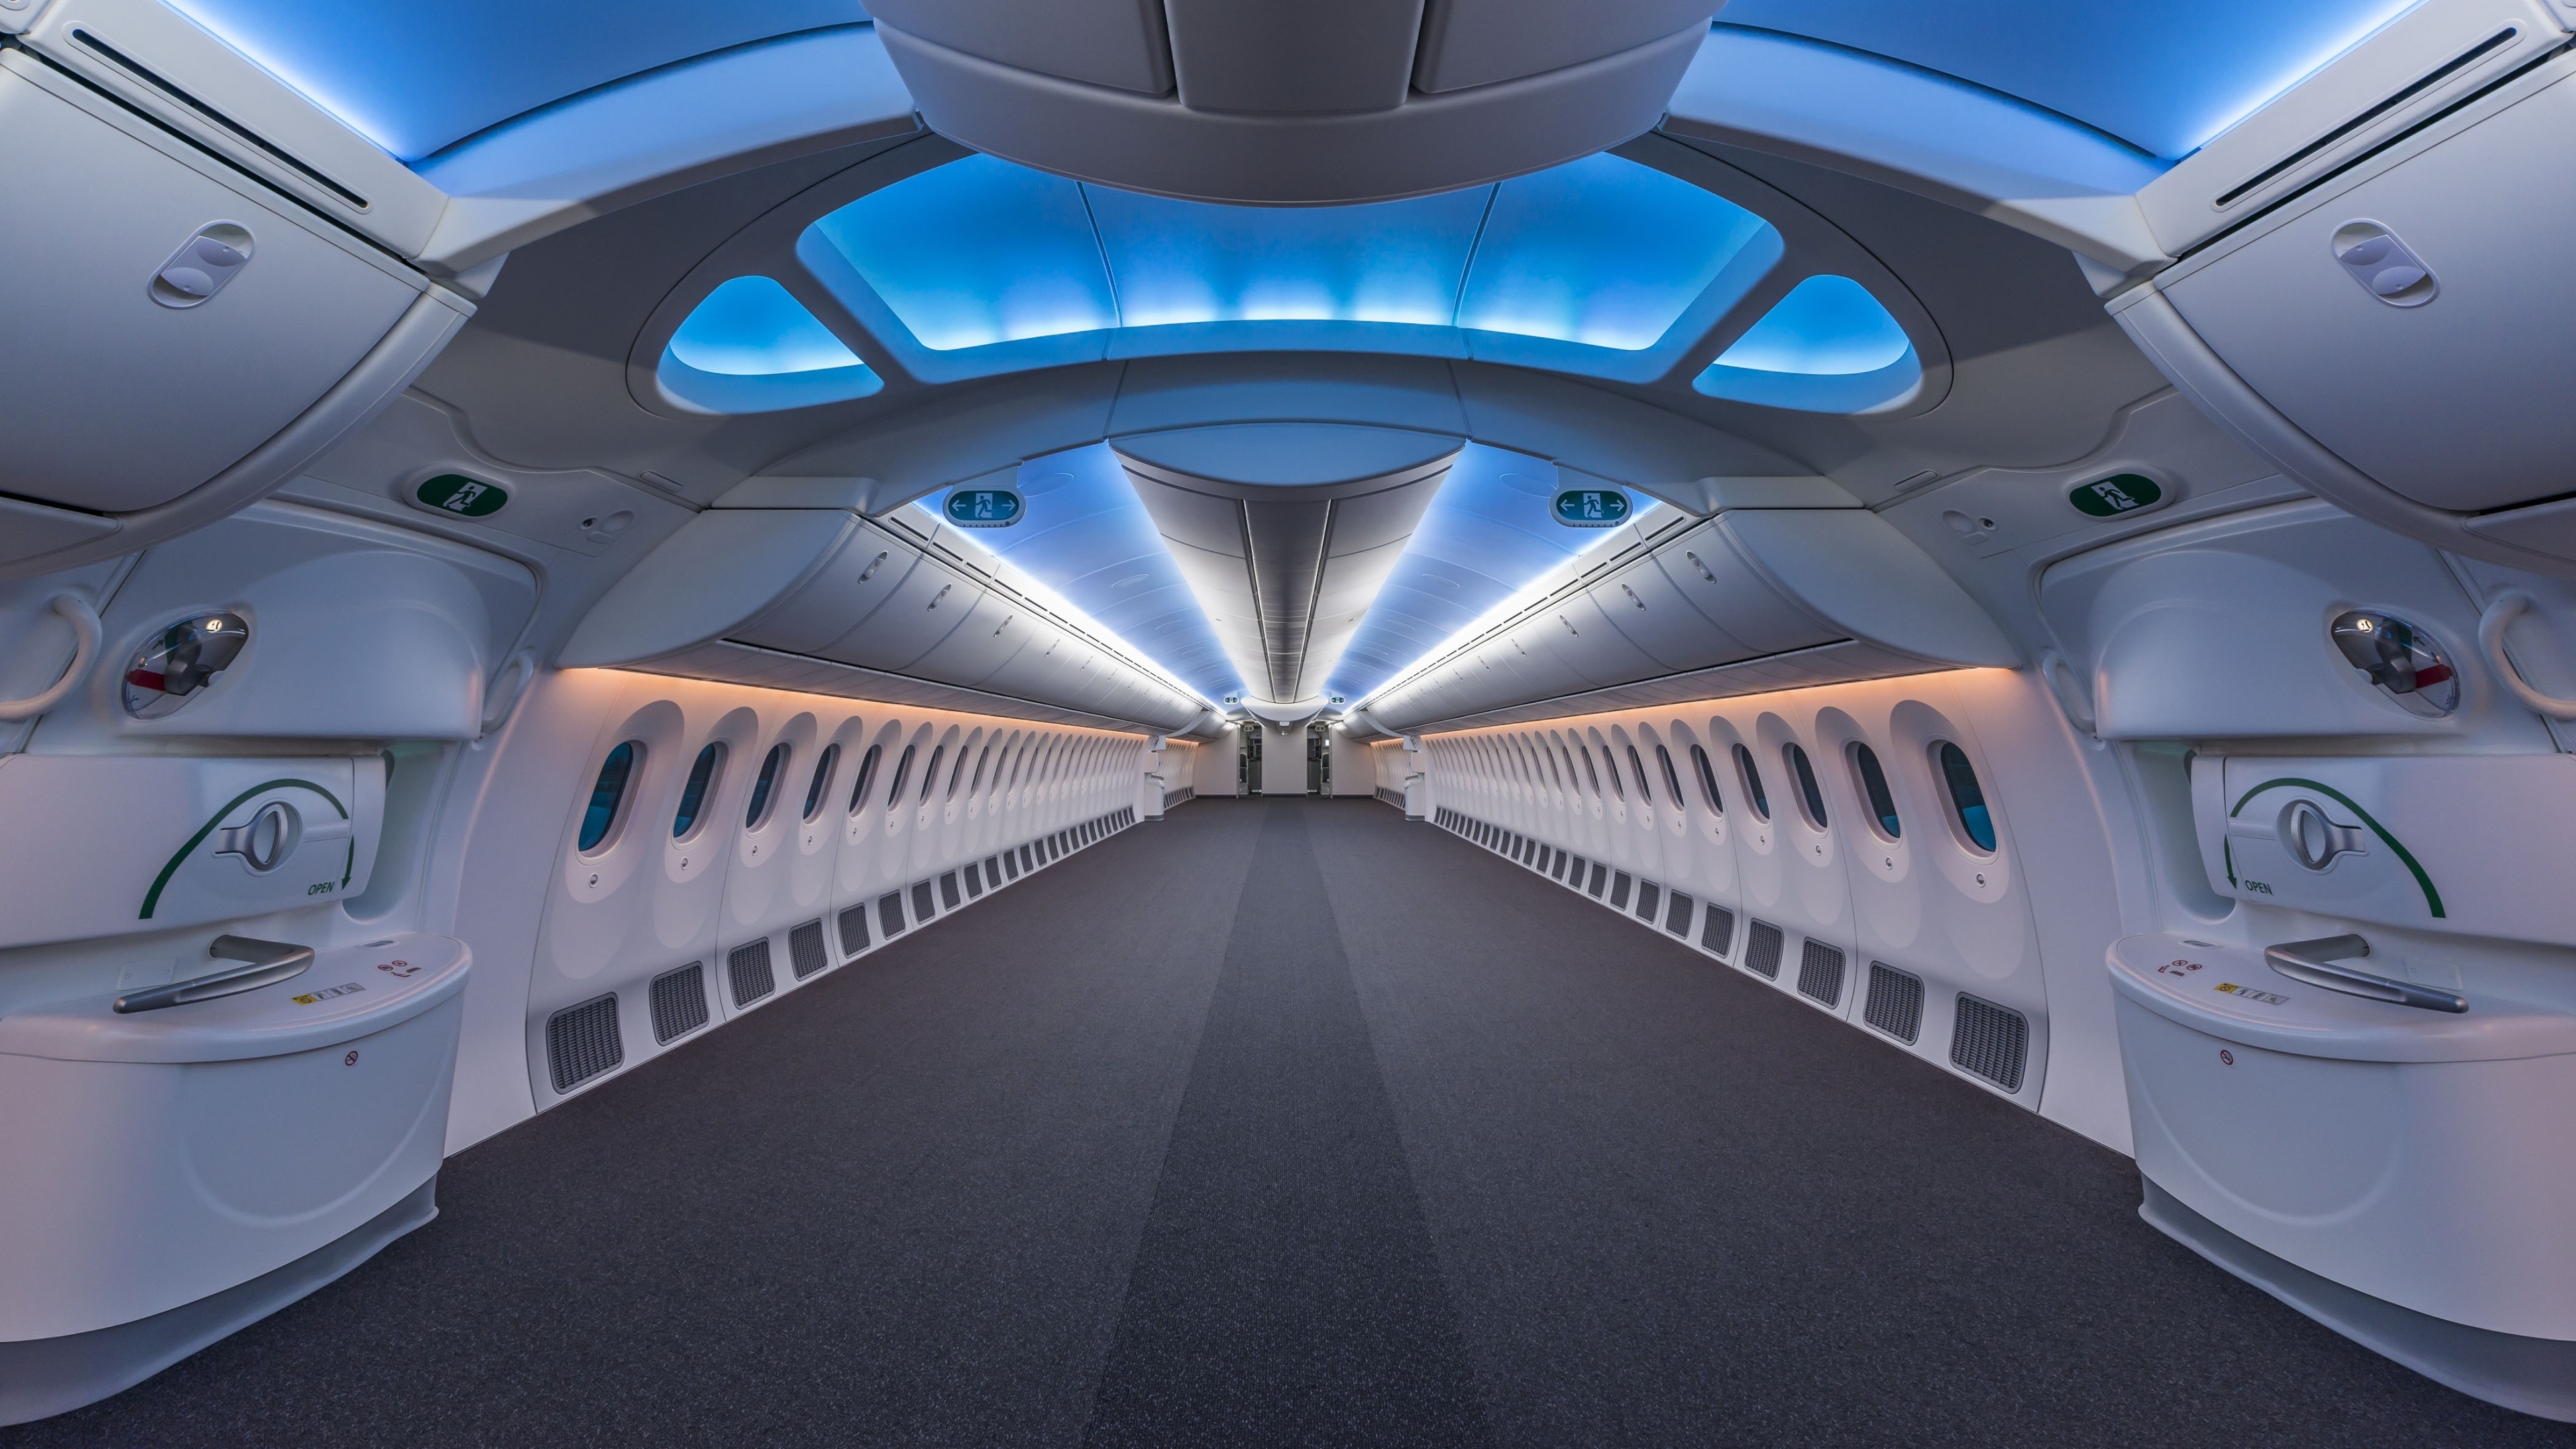 General 3840x2160 symmetry interior modern airplane Boeing window luxury Boeing 787 cyan blue vehicle passenger aircraft